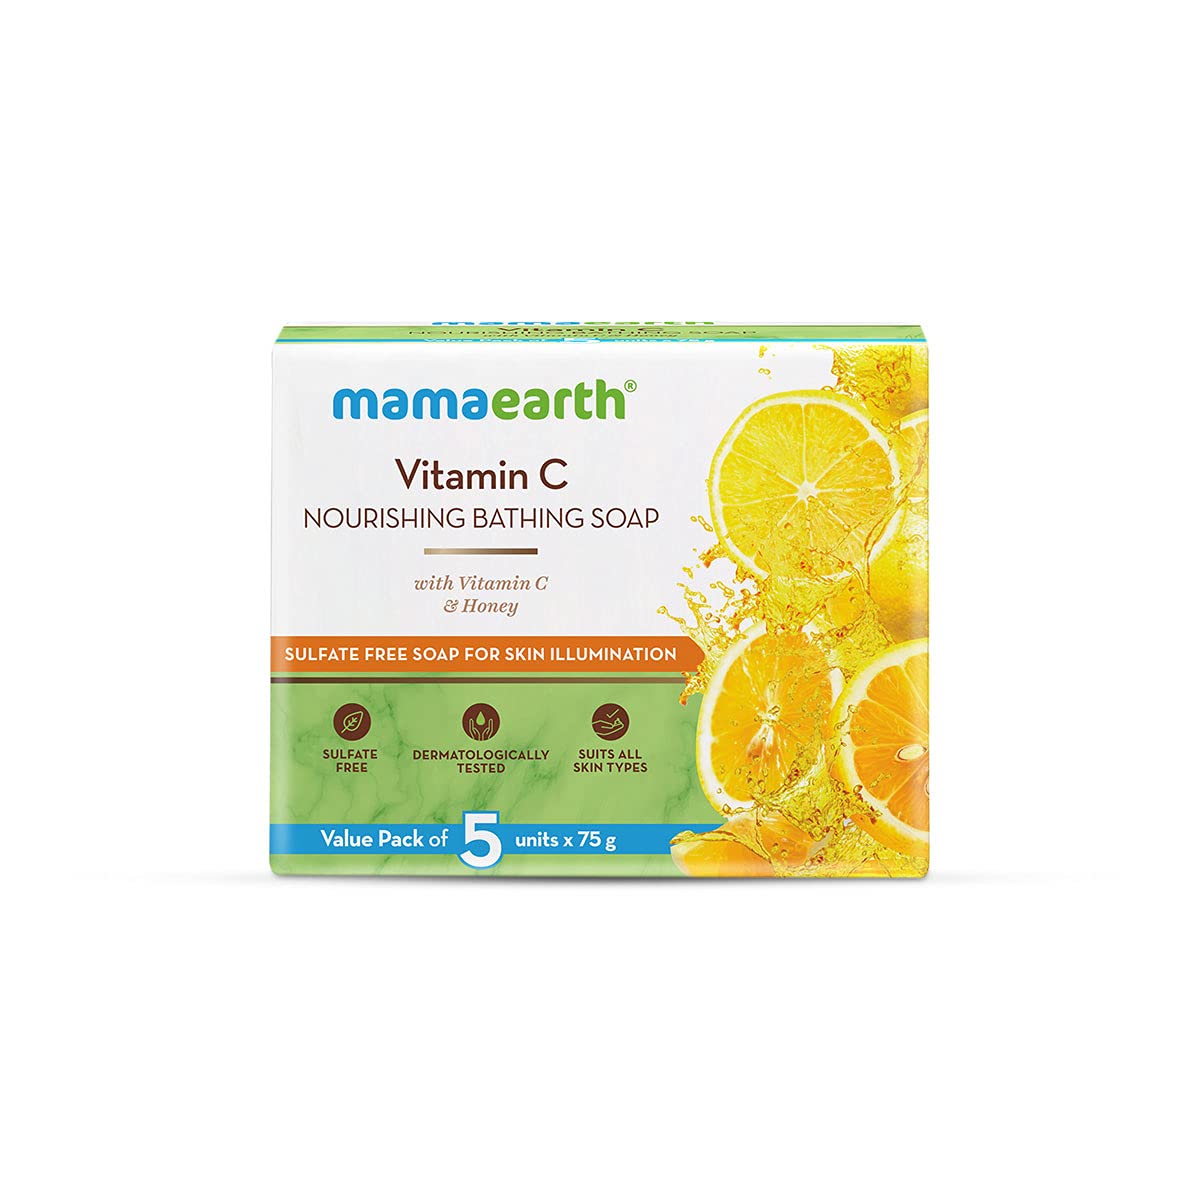 Mamaearth Vitamin C Nourishing Bathing Soap Bar with Honey for Skin Illumination - 75gm x 5